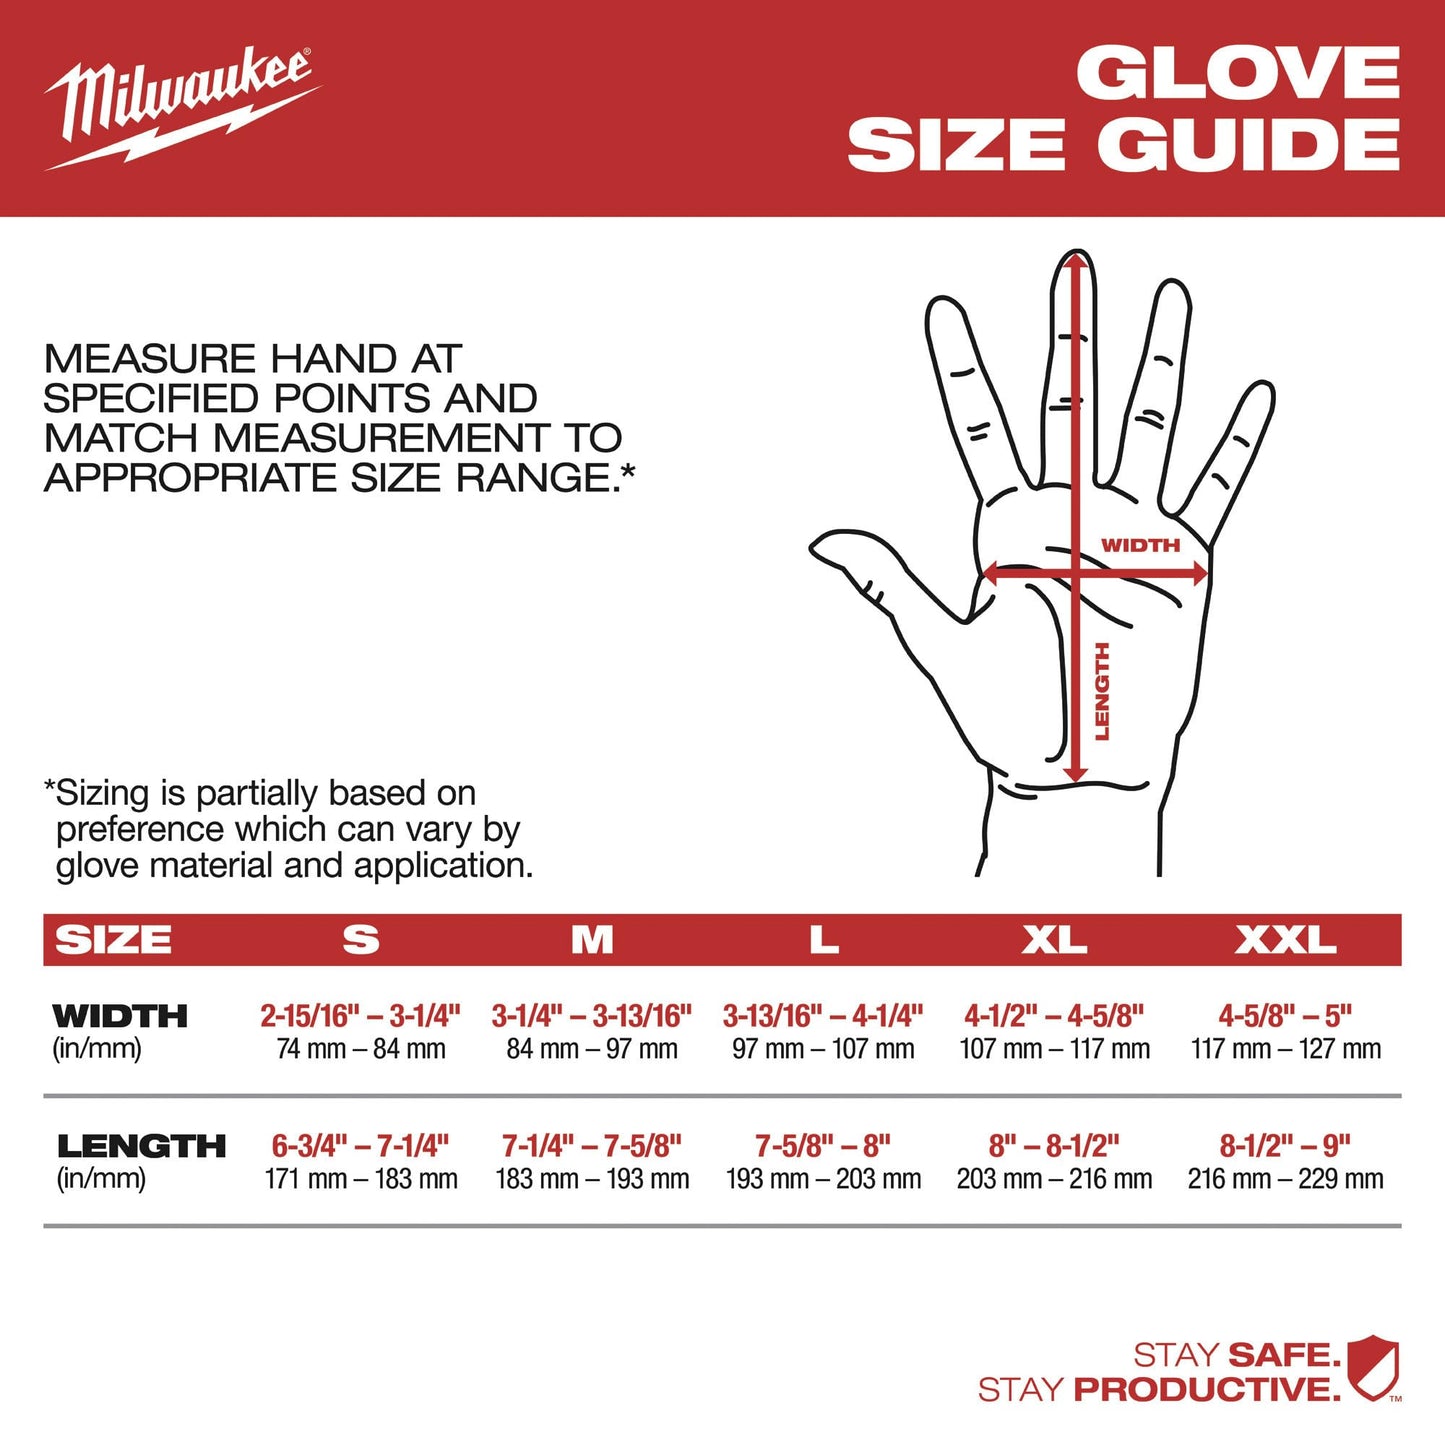 Milwaukee 48-22-8723 Performance Work Gloves, X-Large